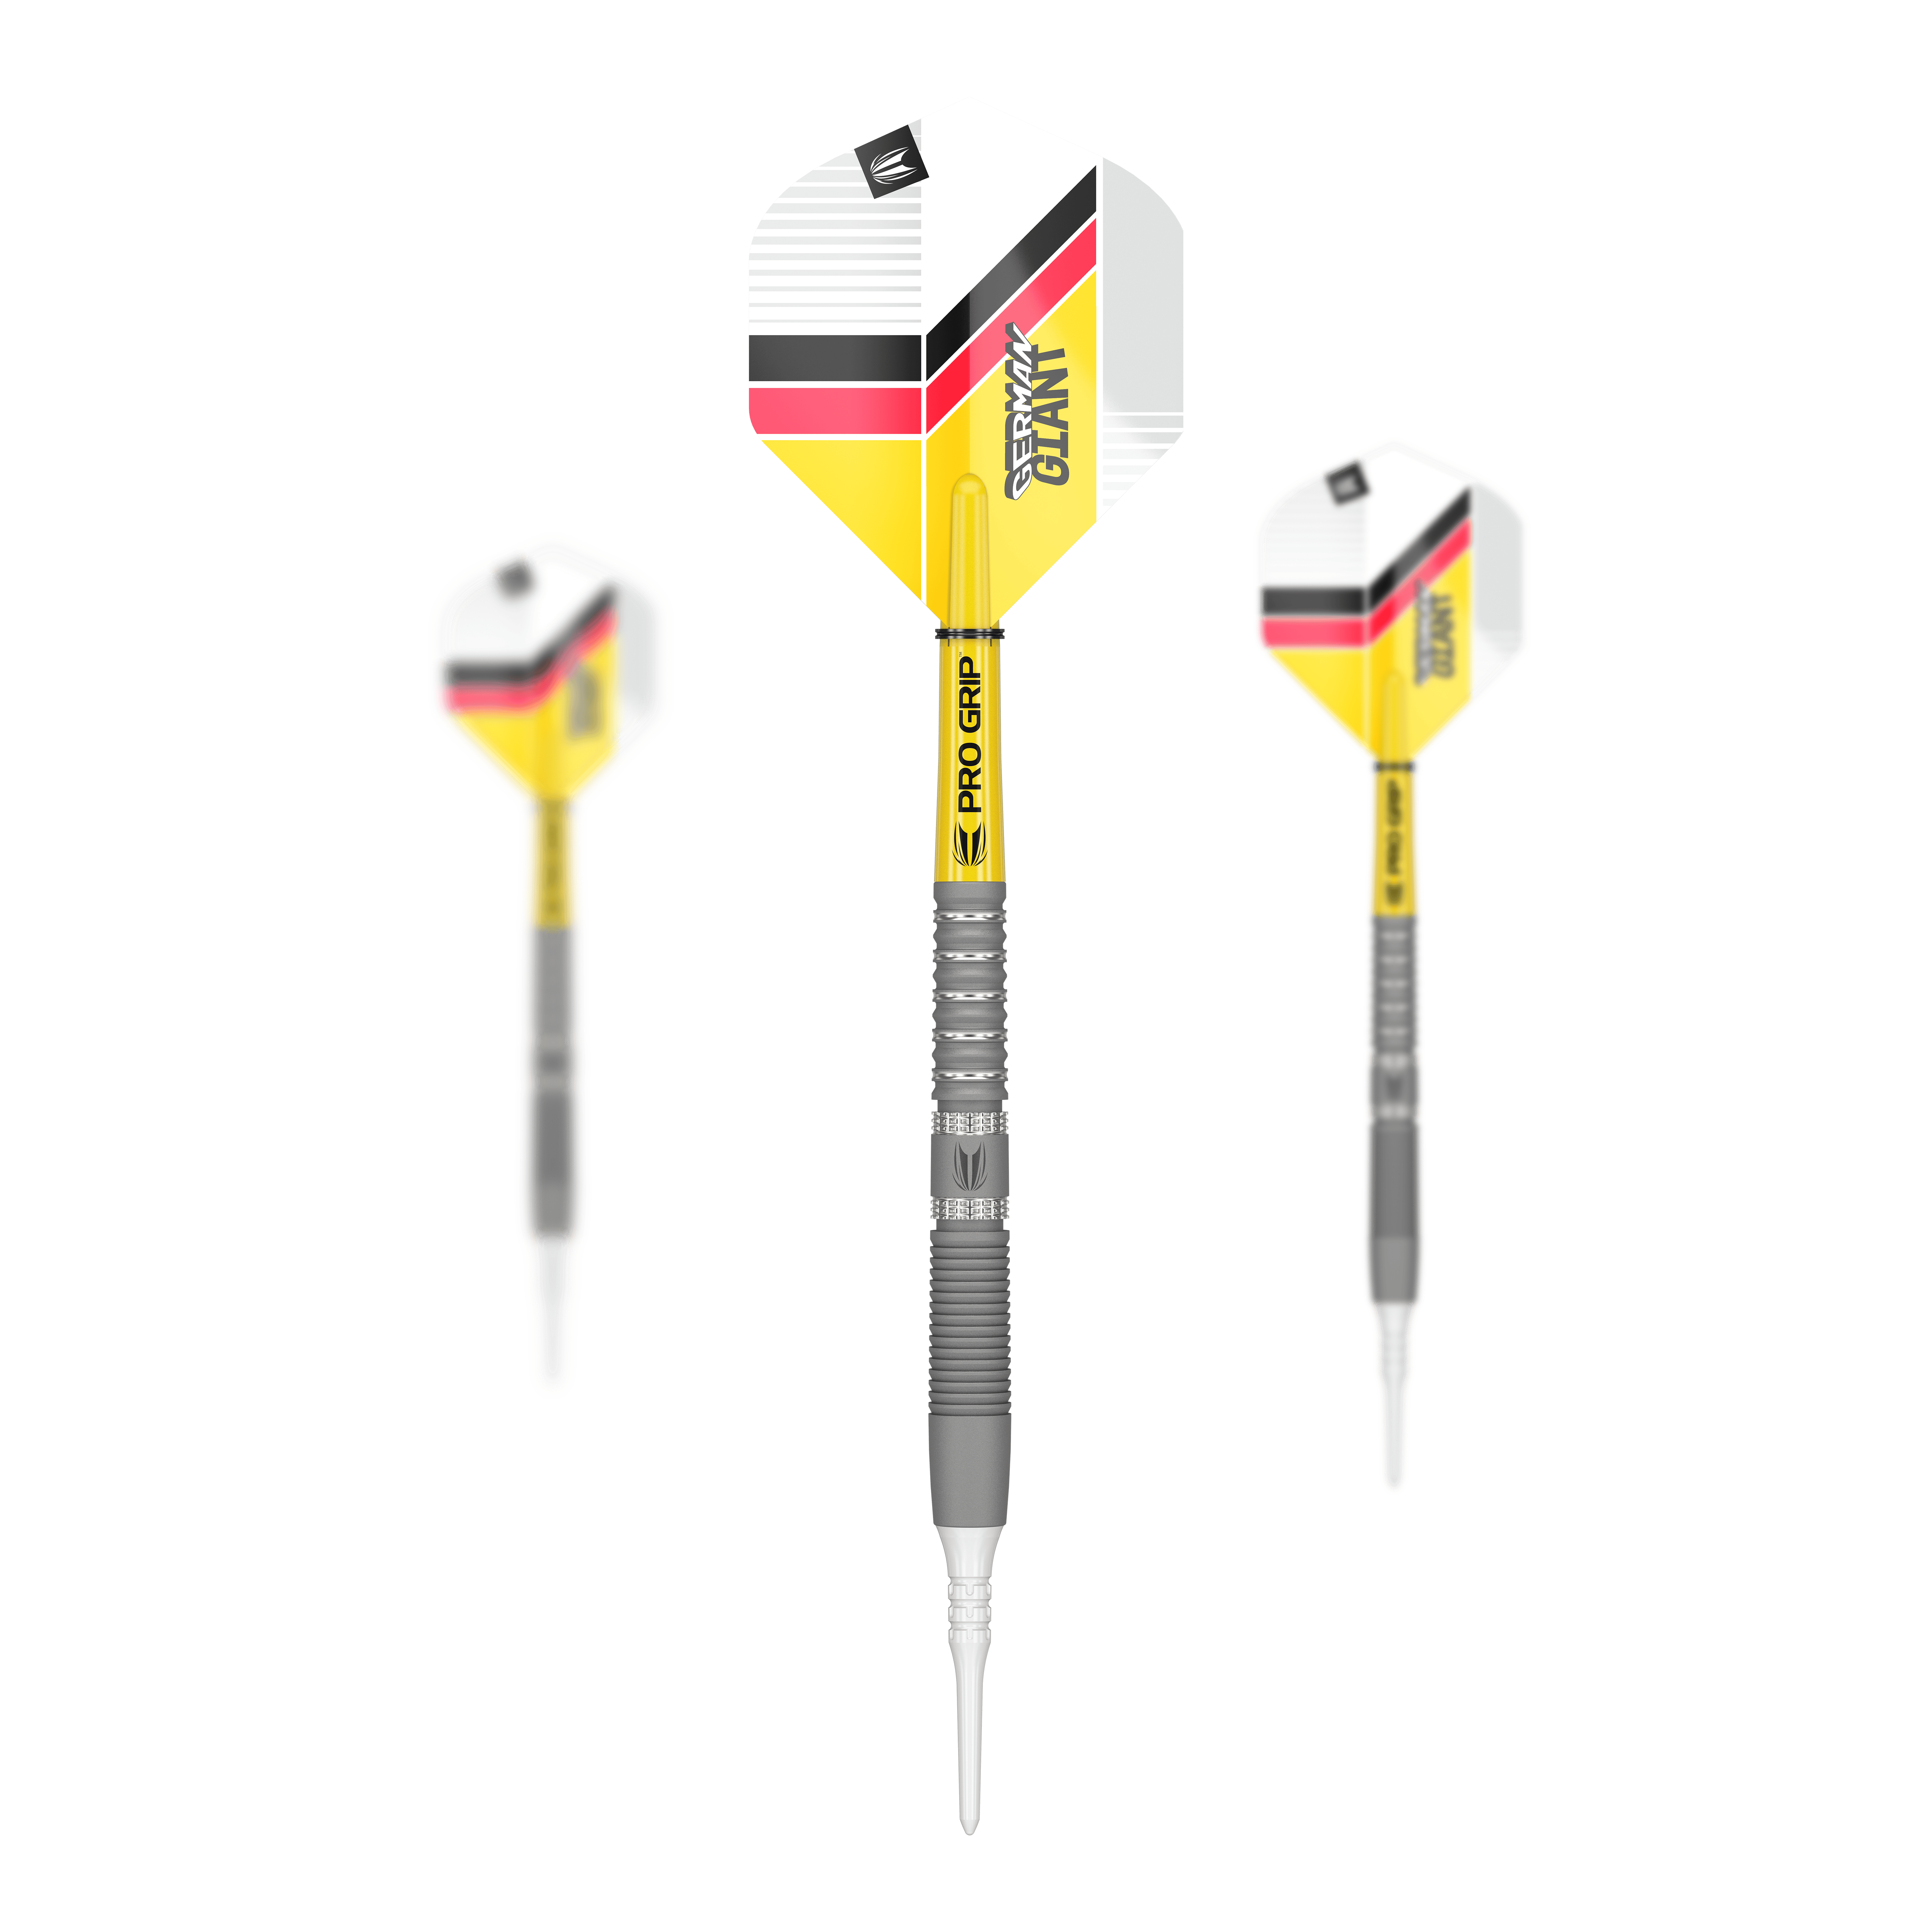 Target Gabriel Clemens GEN2 soft darts - 19g